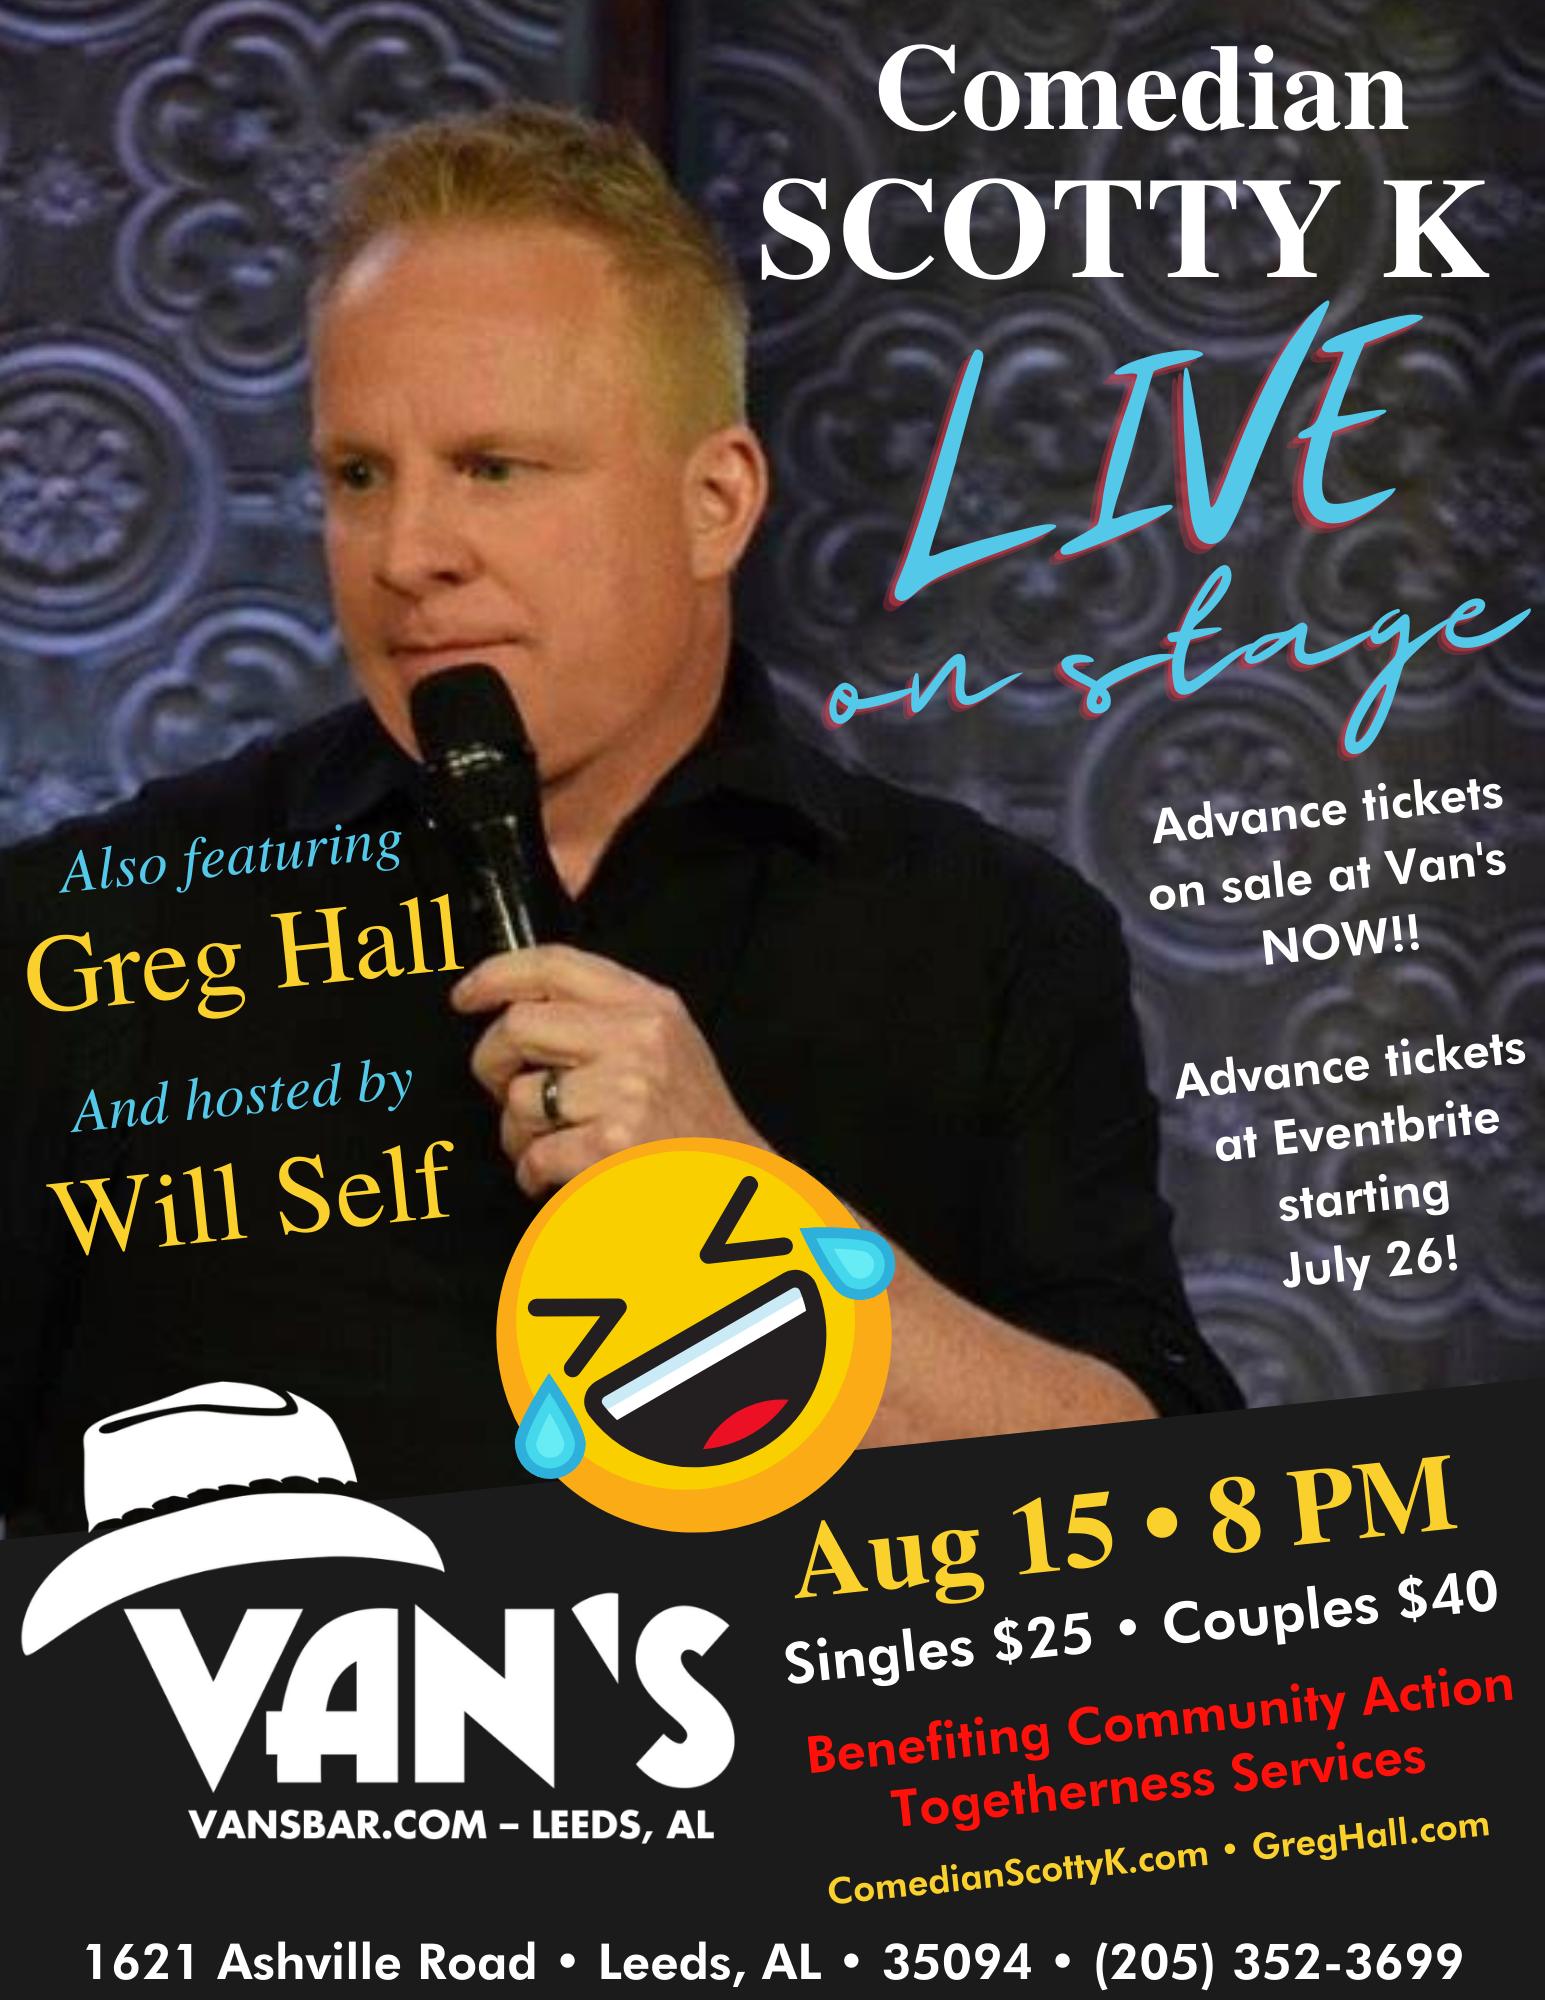 Scotty K LIVE at Van's